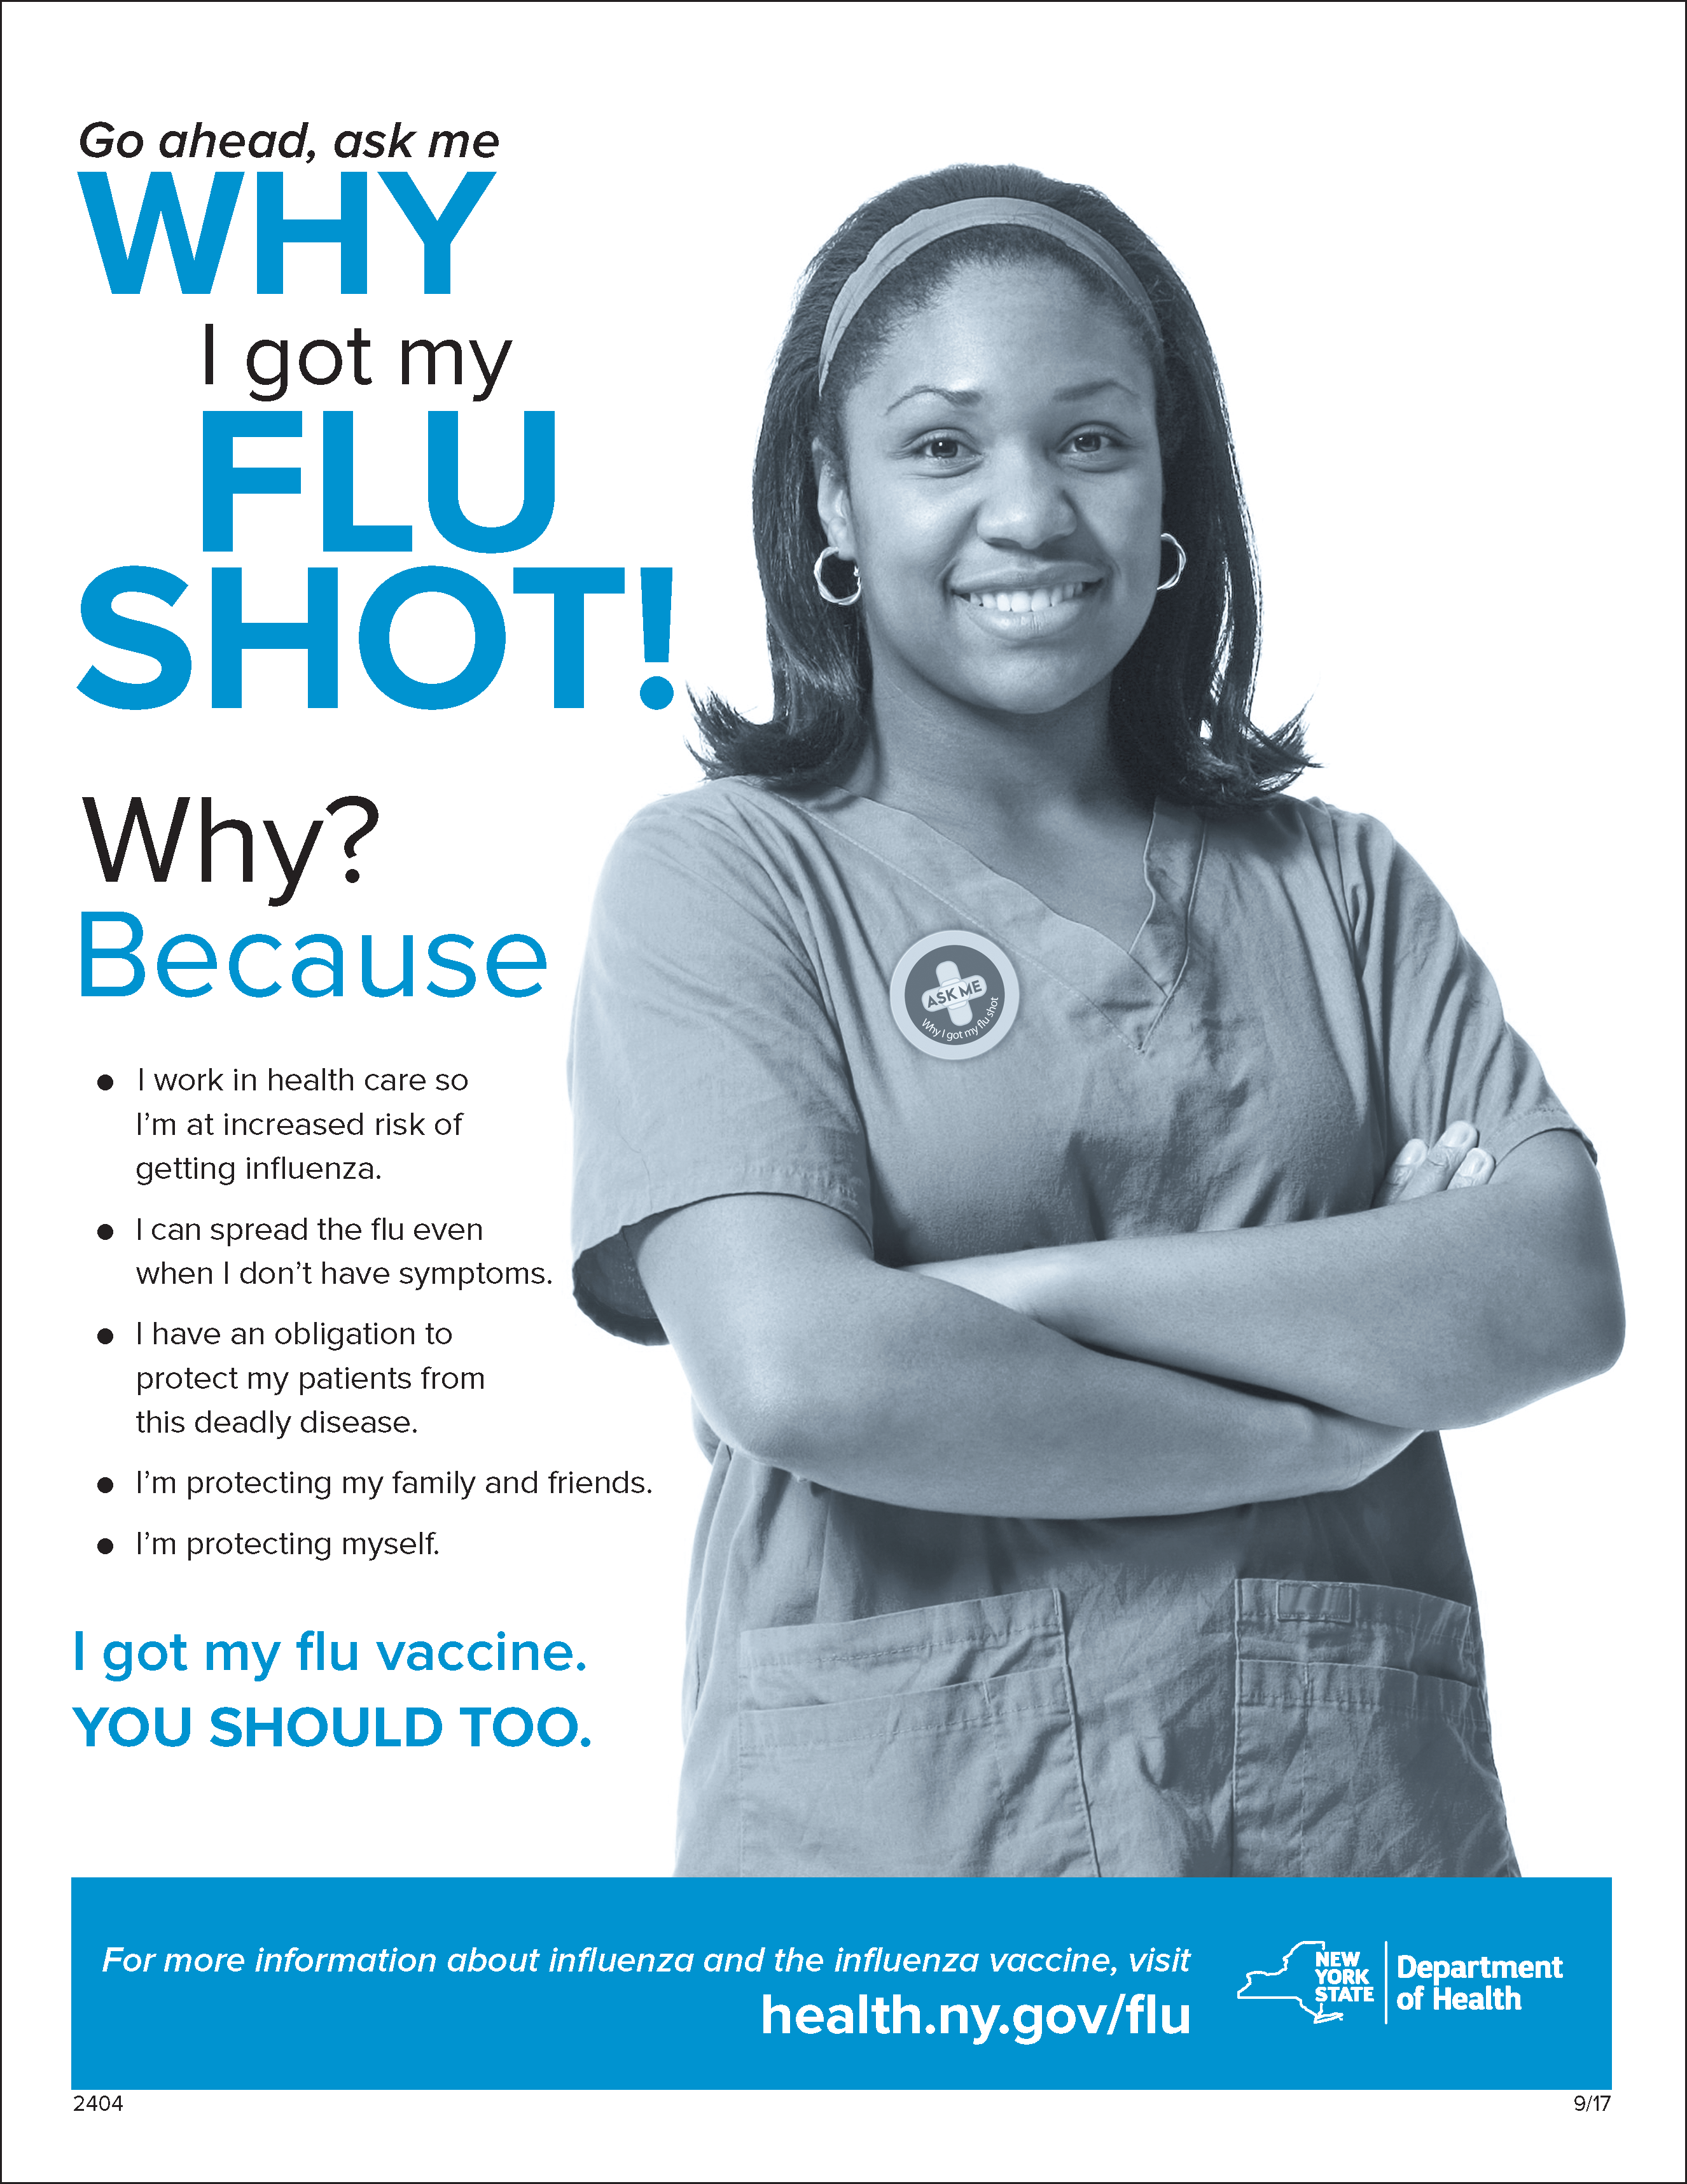 Go ahead, ask me WHY I got my FLU SHOT! (poster)